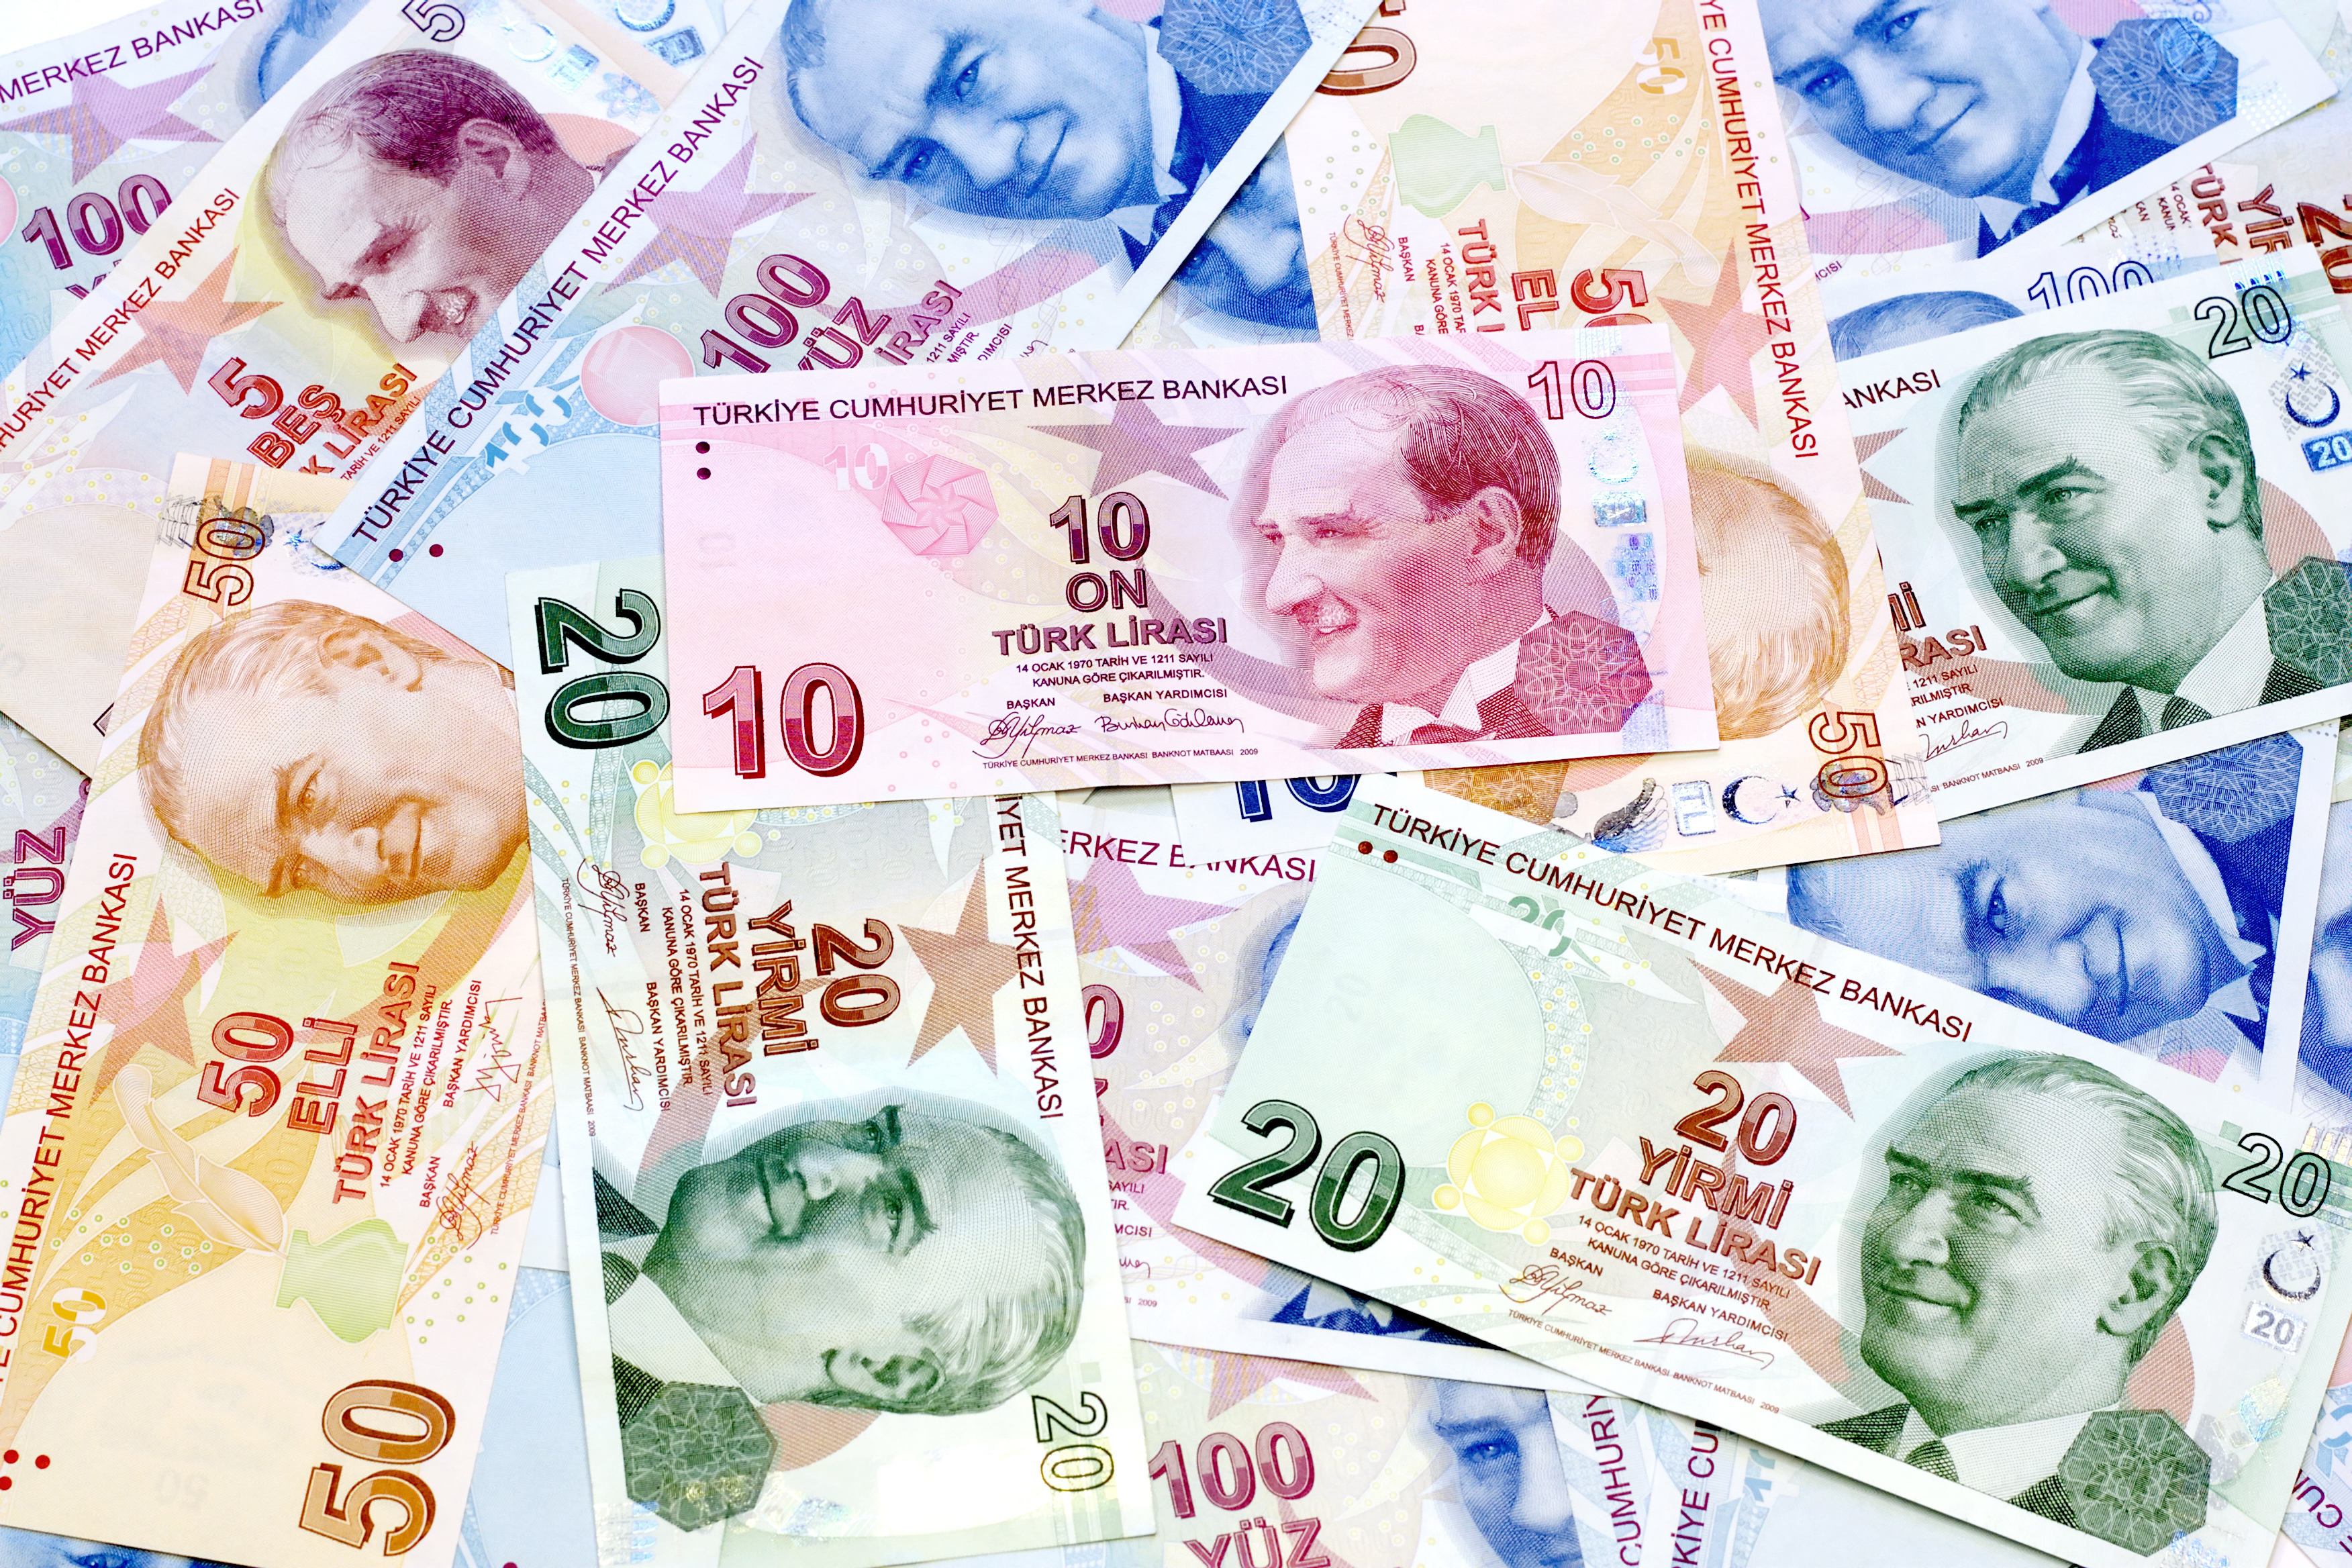 Турецкие лиры купюры. Банкноты турецкой Лиры. Деньги туркия.